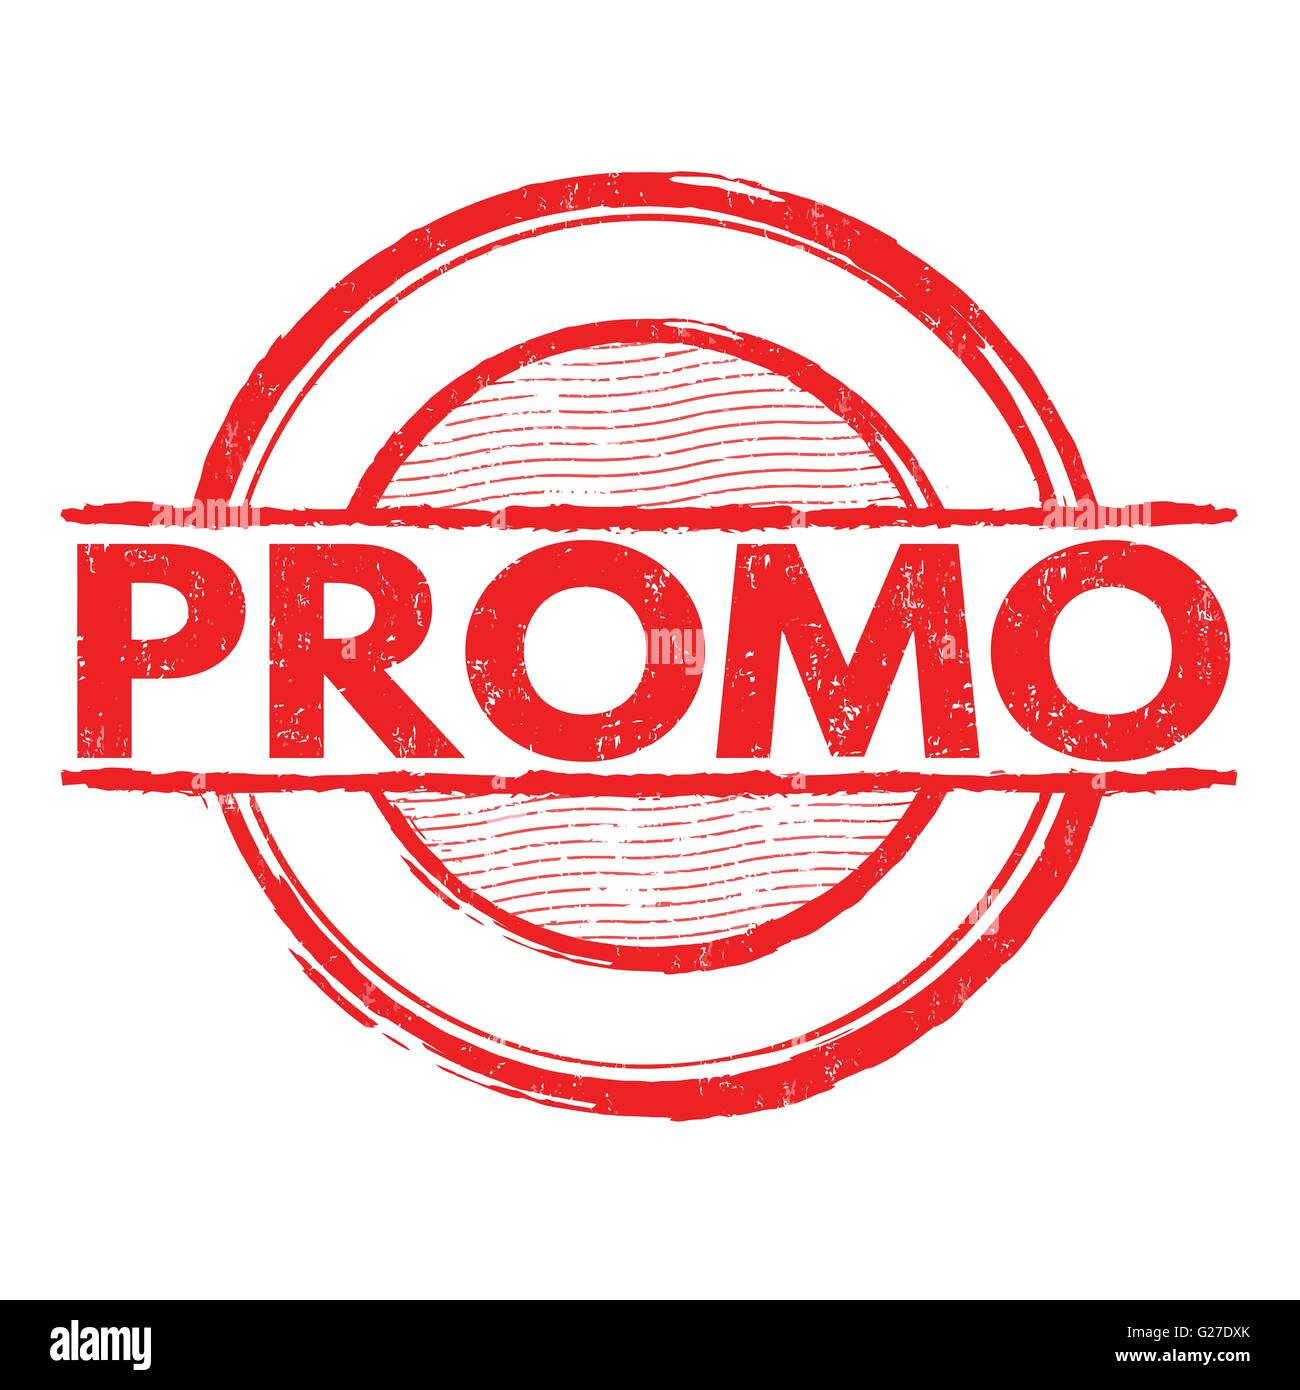 Promo grunge rubber stamp on white background, vector illustration Stock Vector